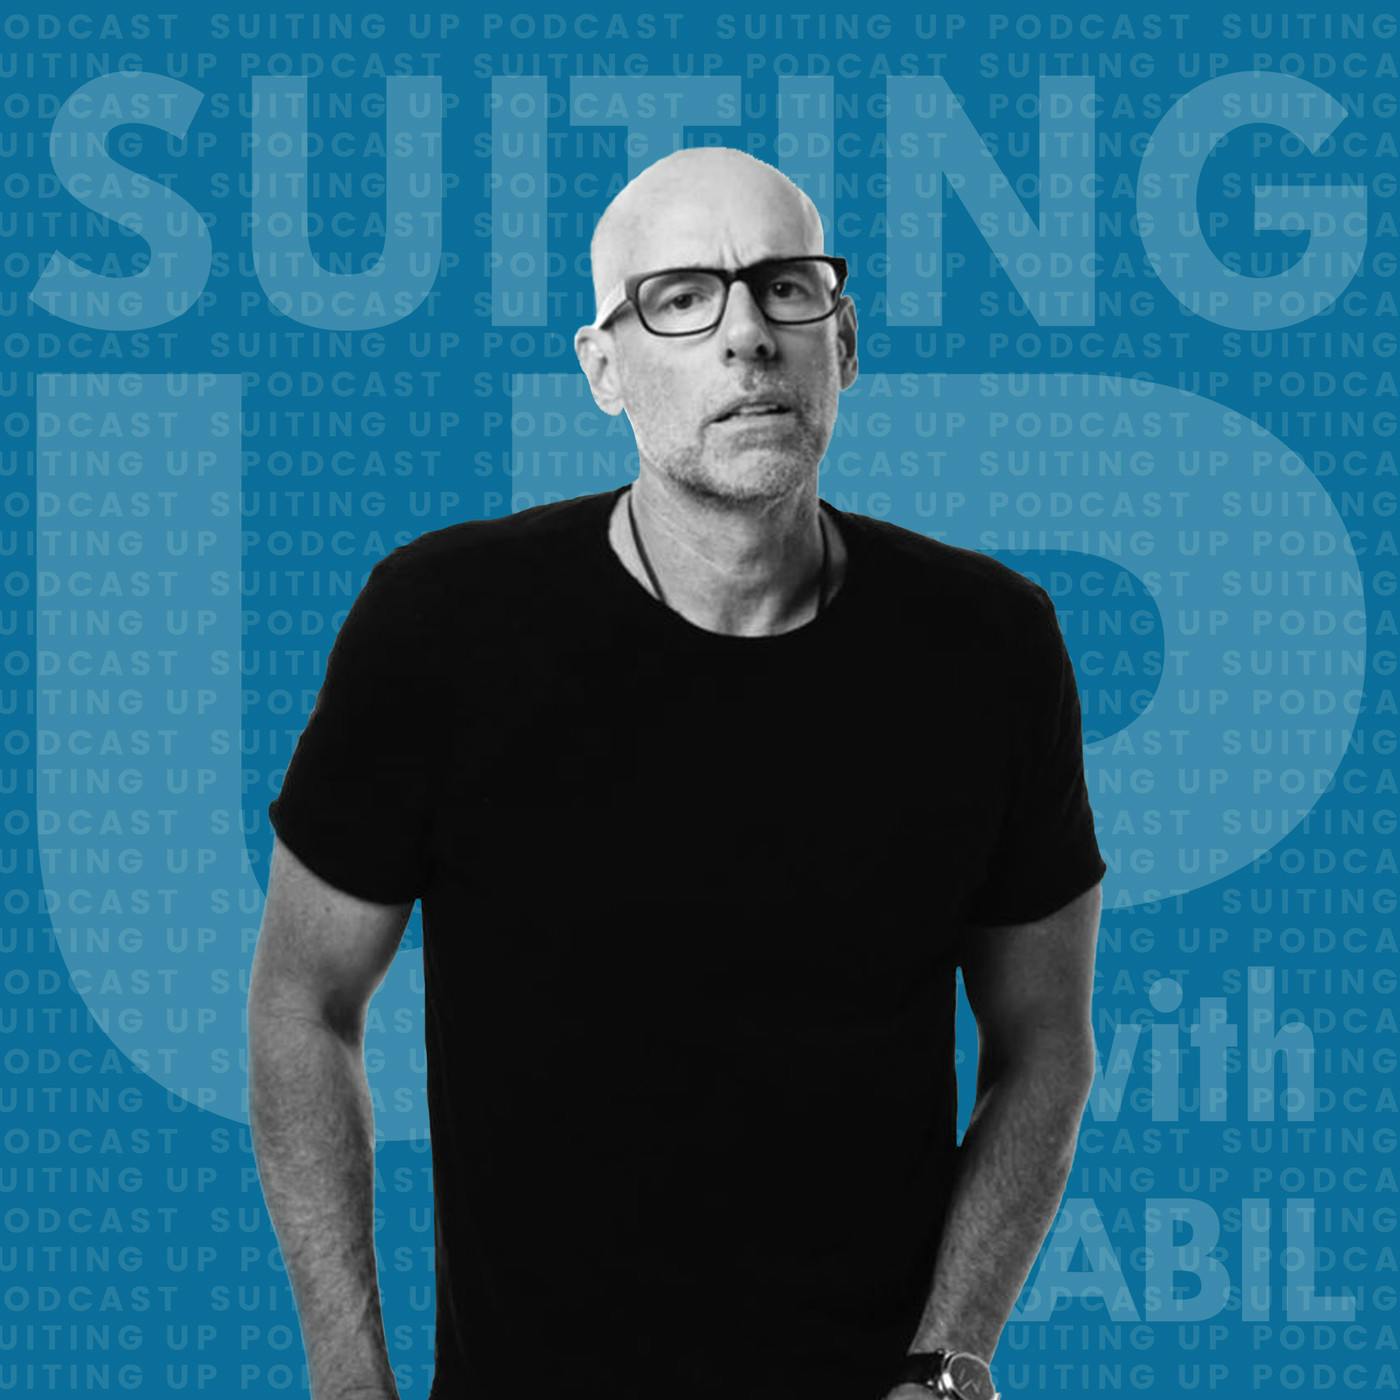 Scott Galloway: Entrepreneur, Marketing Professor at NYU Stern, Author and YouTuber